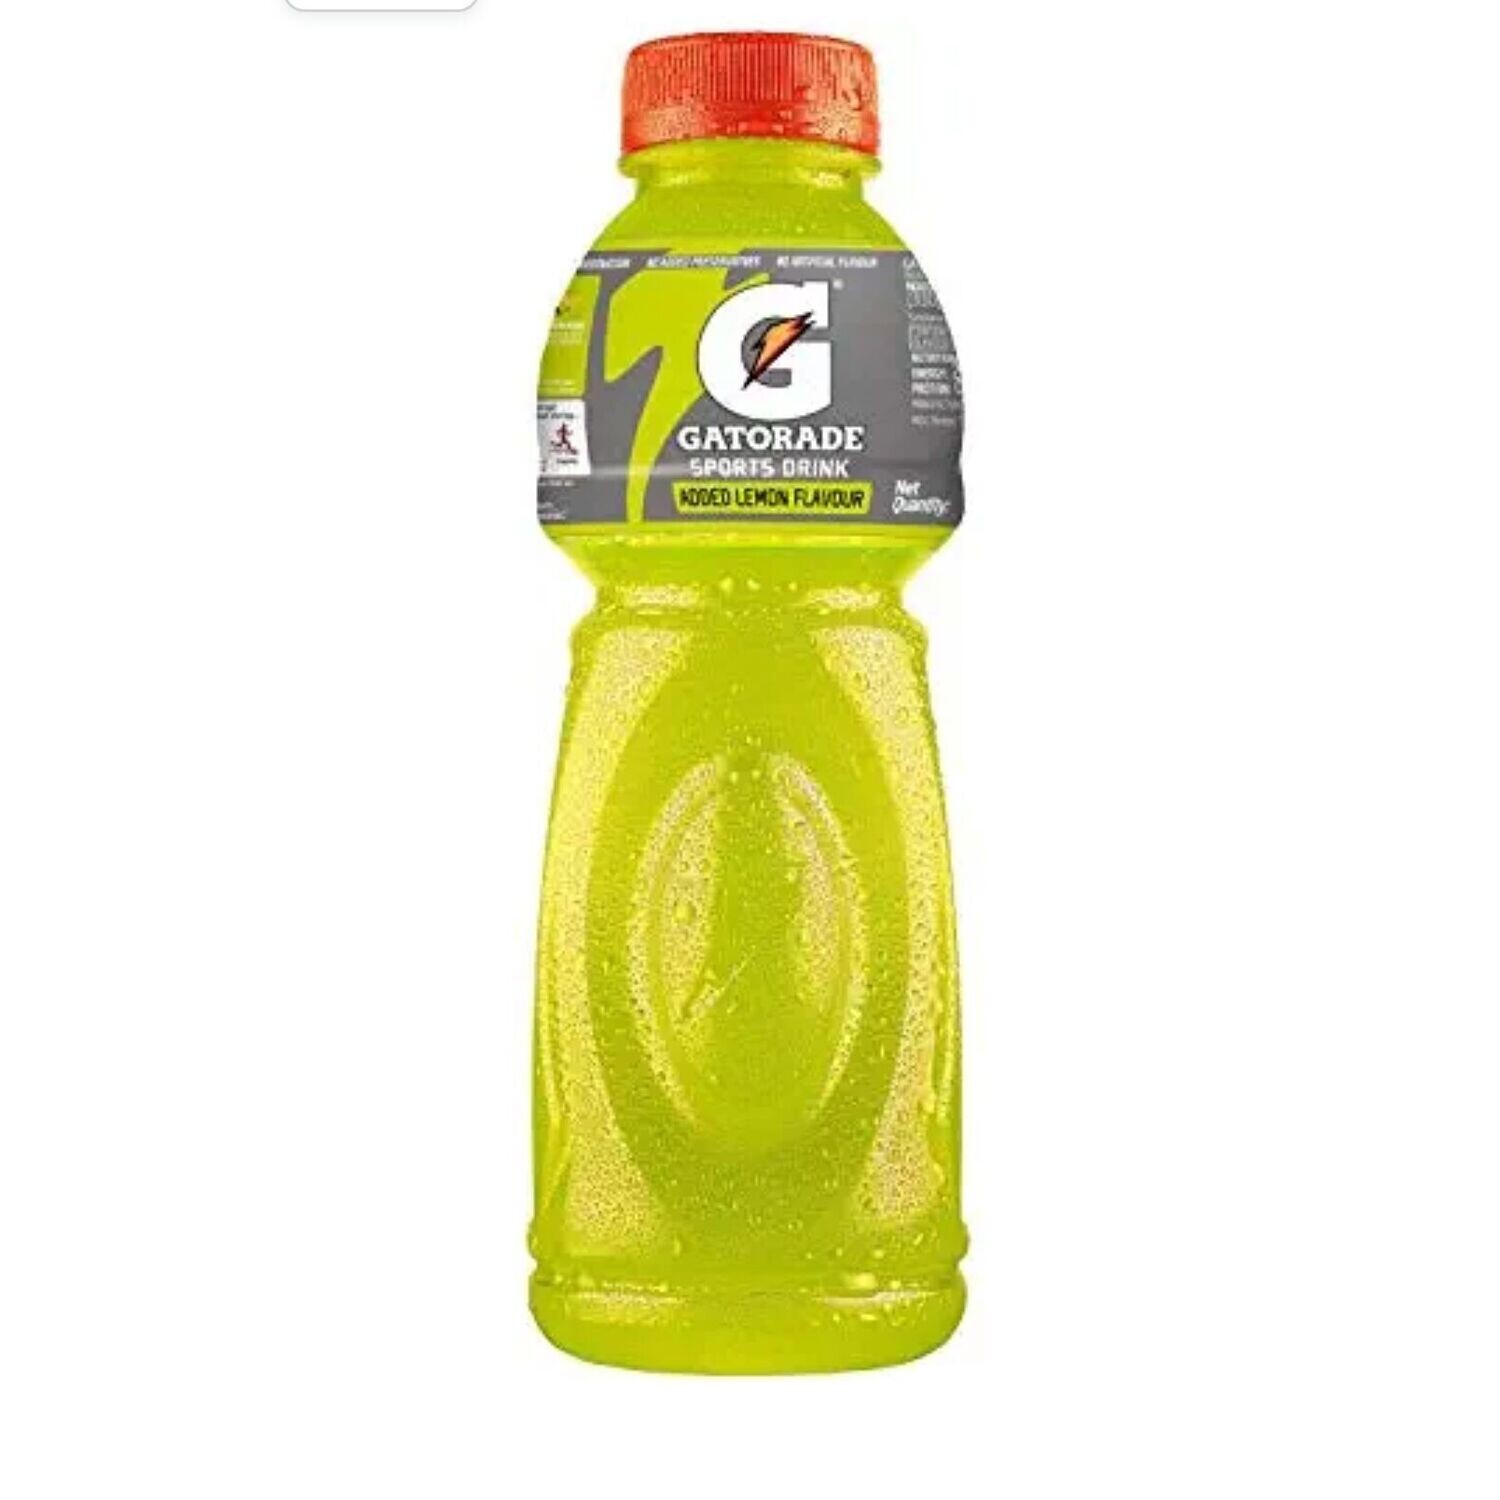 Gatorade Sports Drink - Lemon Flavor - 500ml